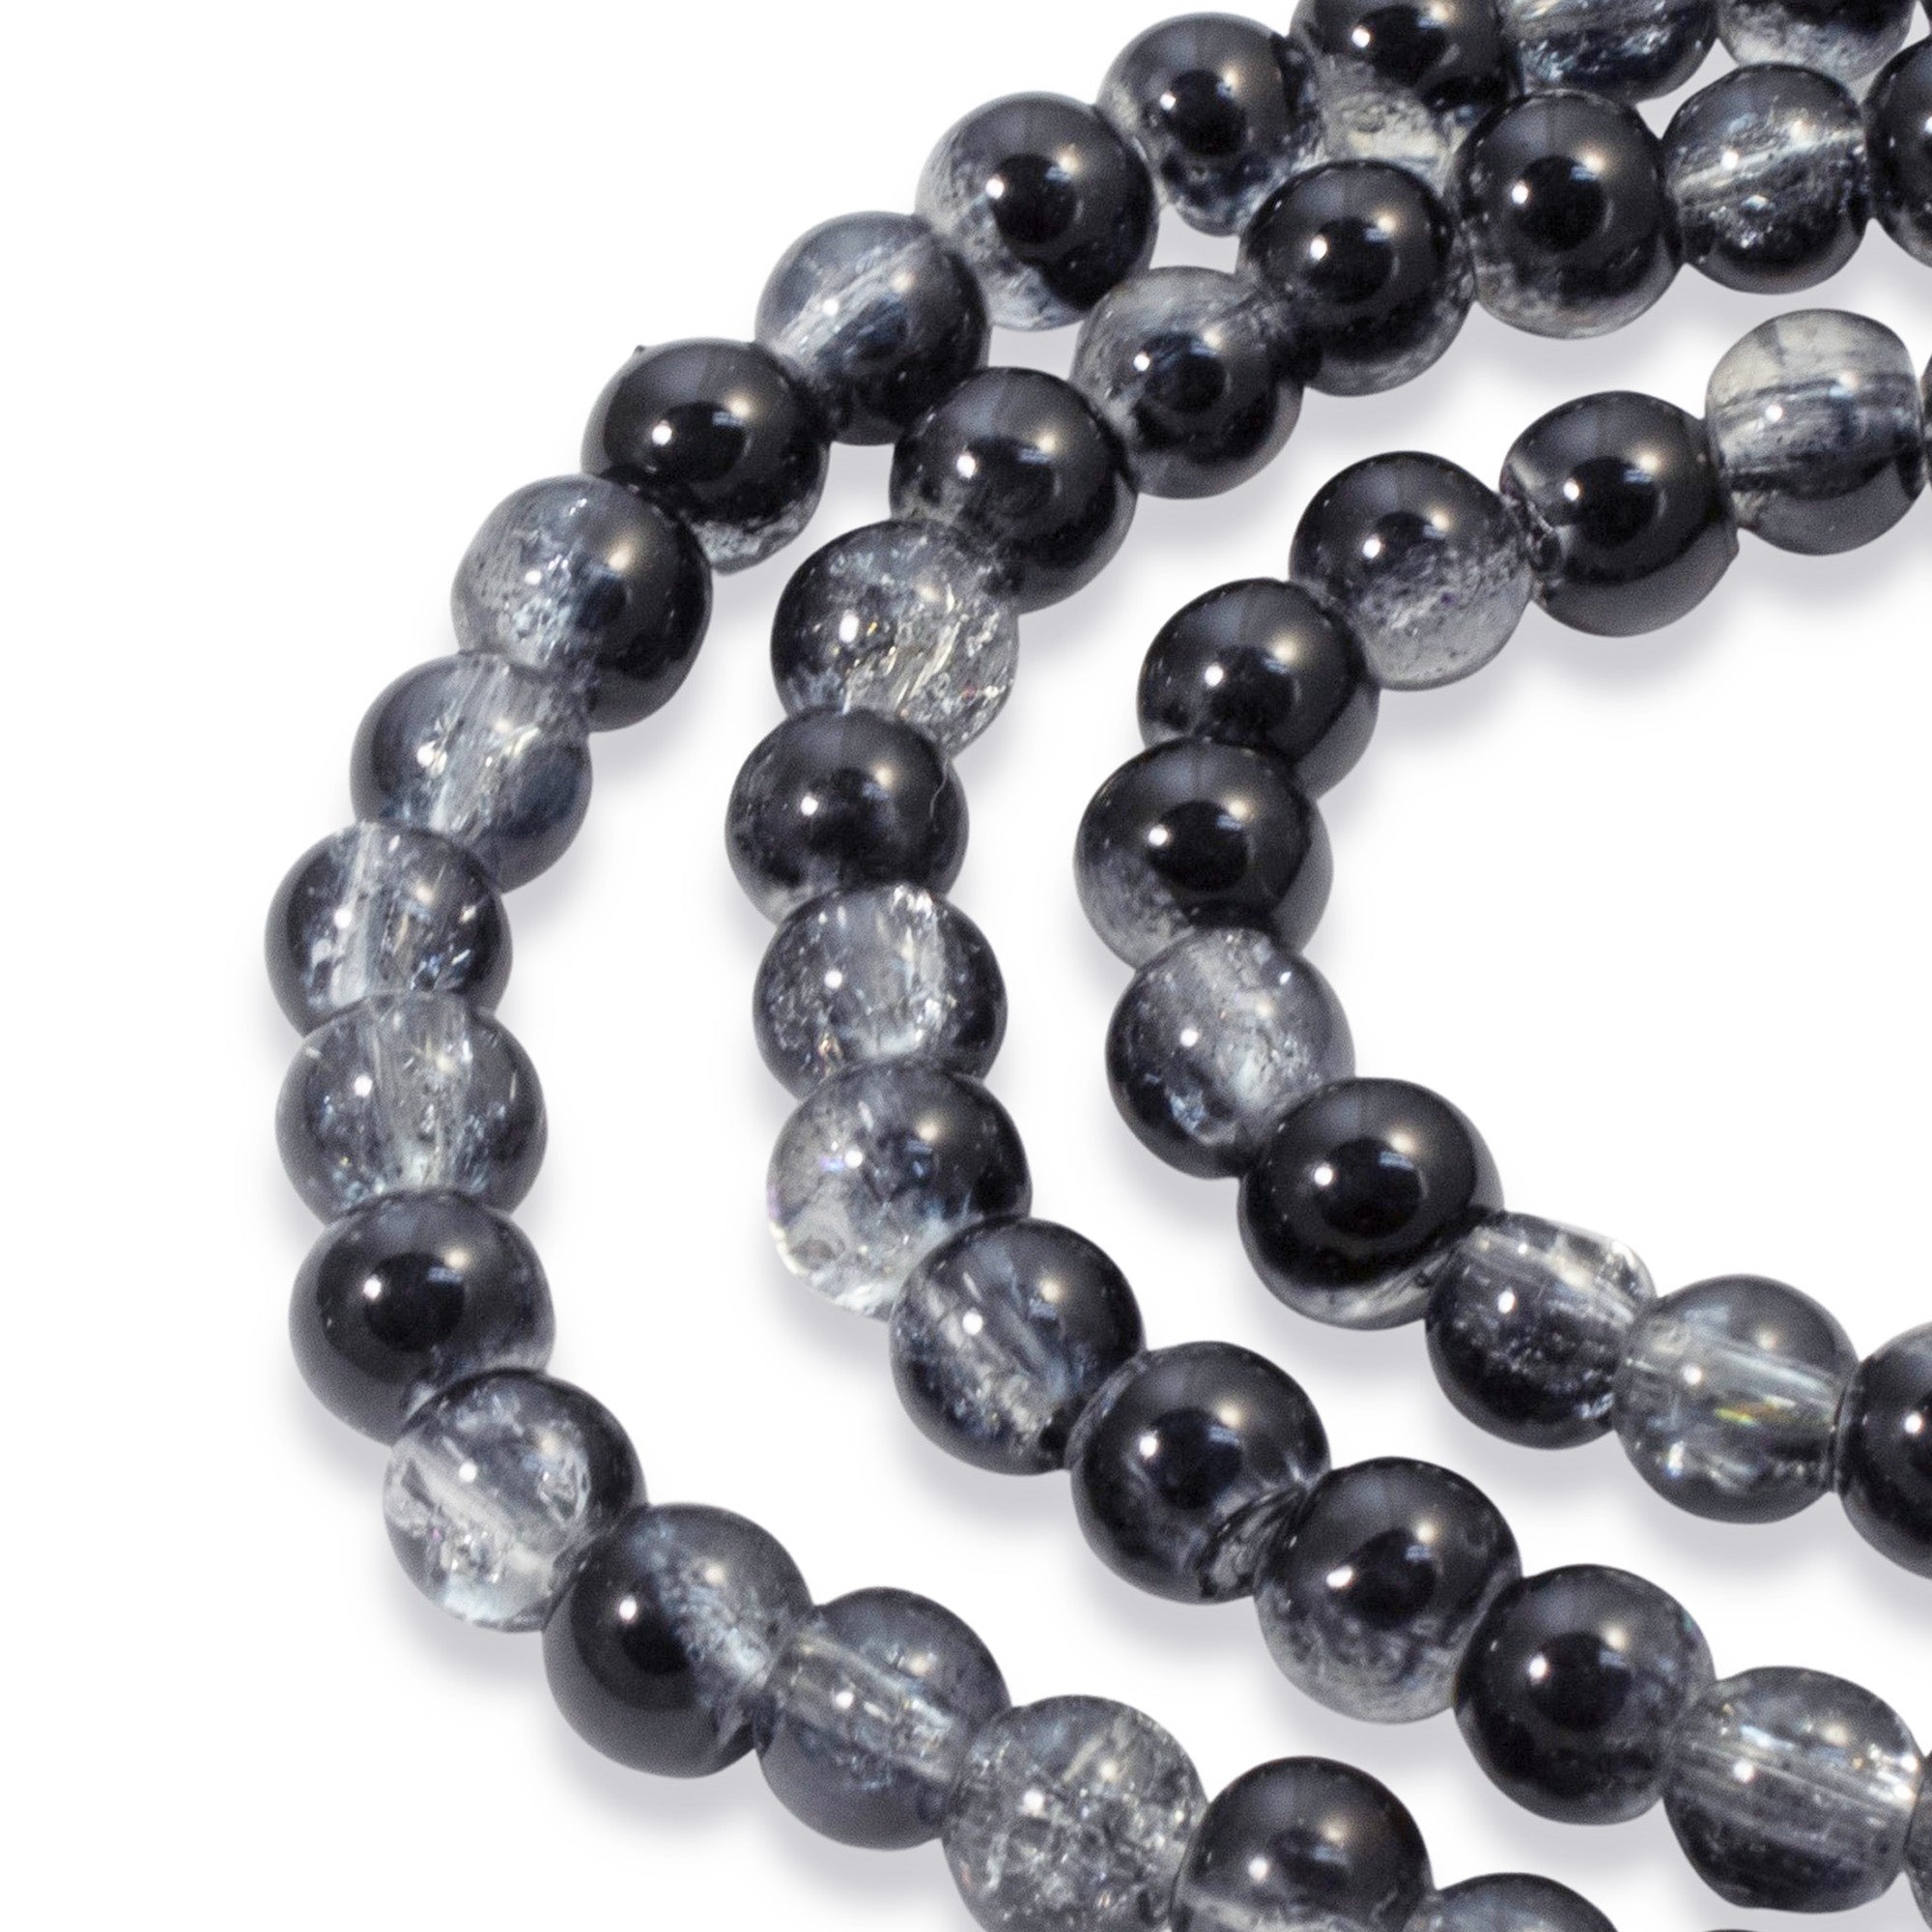 Labradorite 8mm Round Glass Beads, 45 Pieces